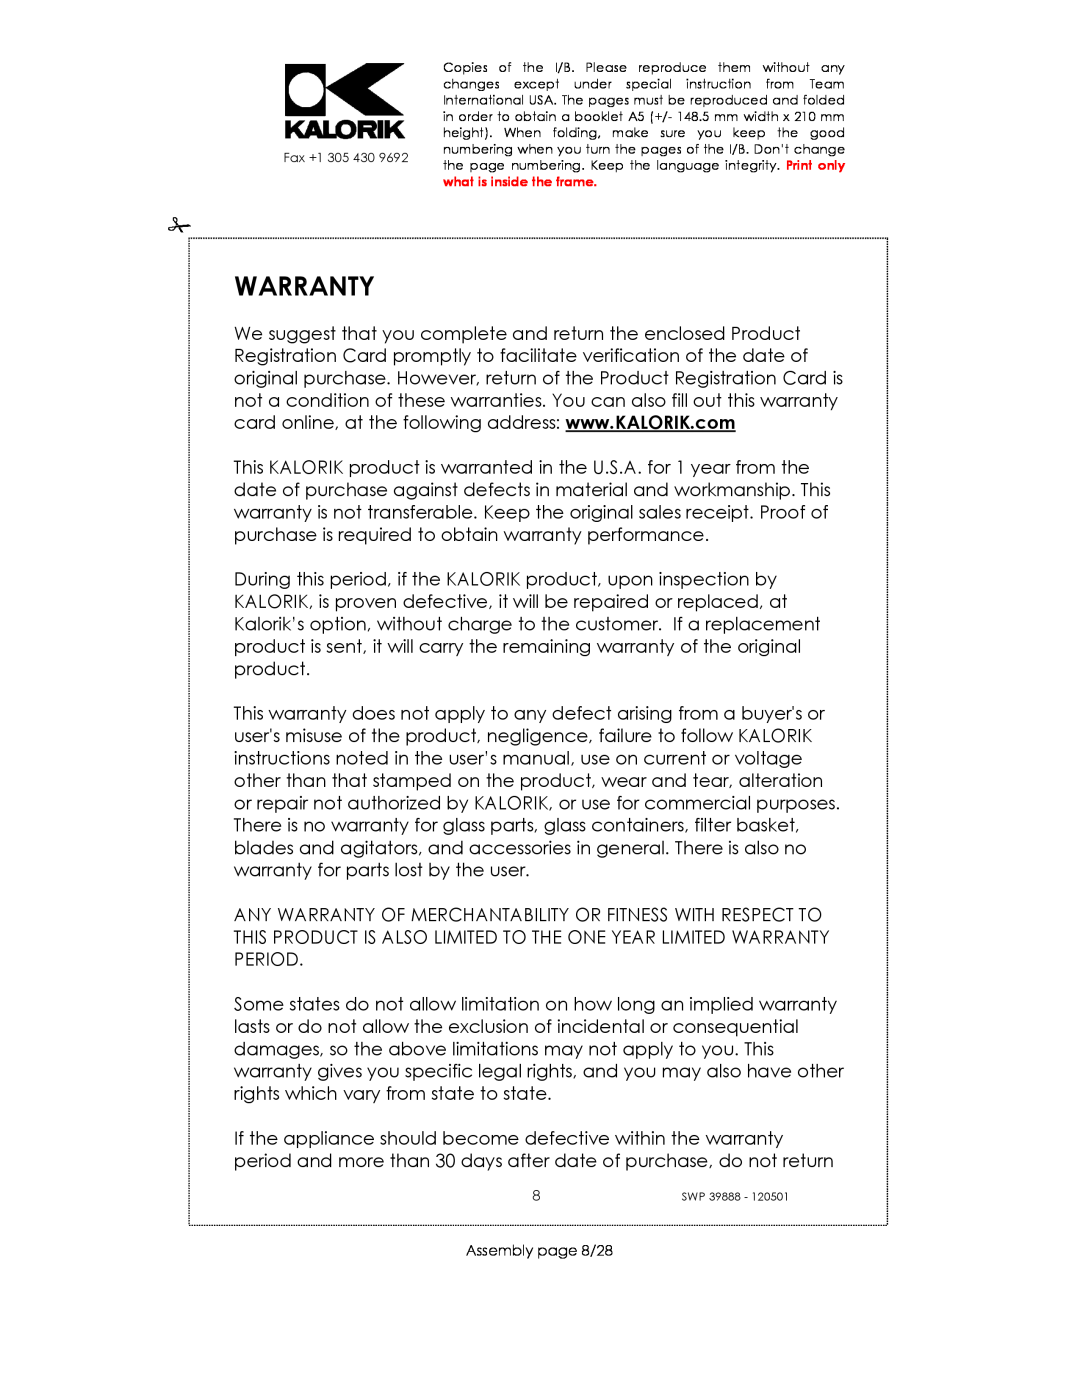 Kalorik SWP 39888 manual Warranty, Assembly page 8/28 